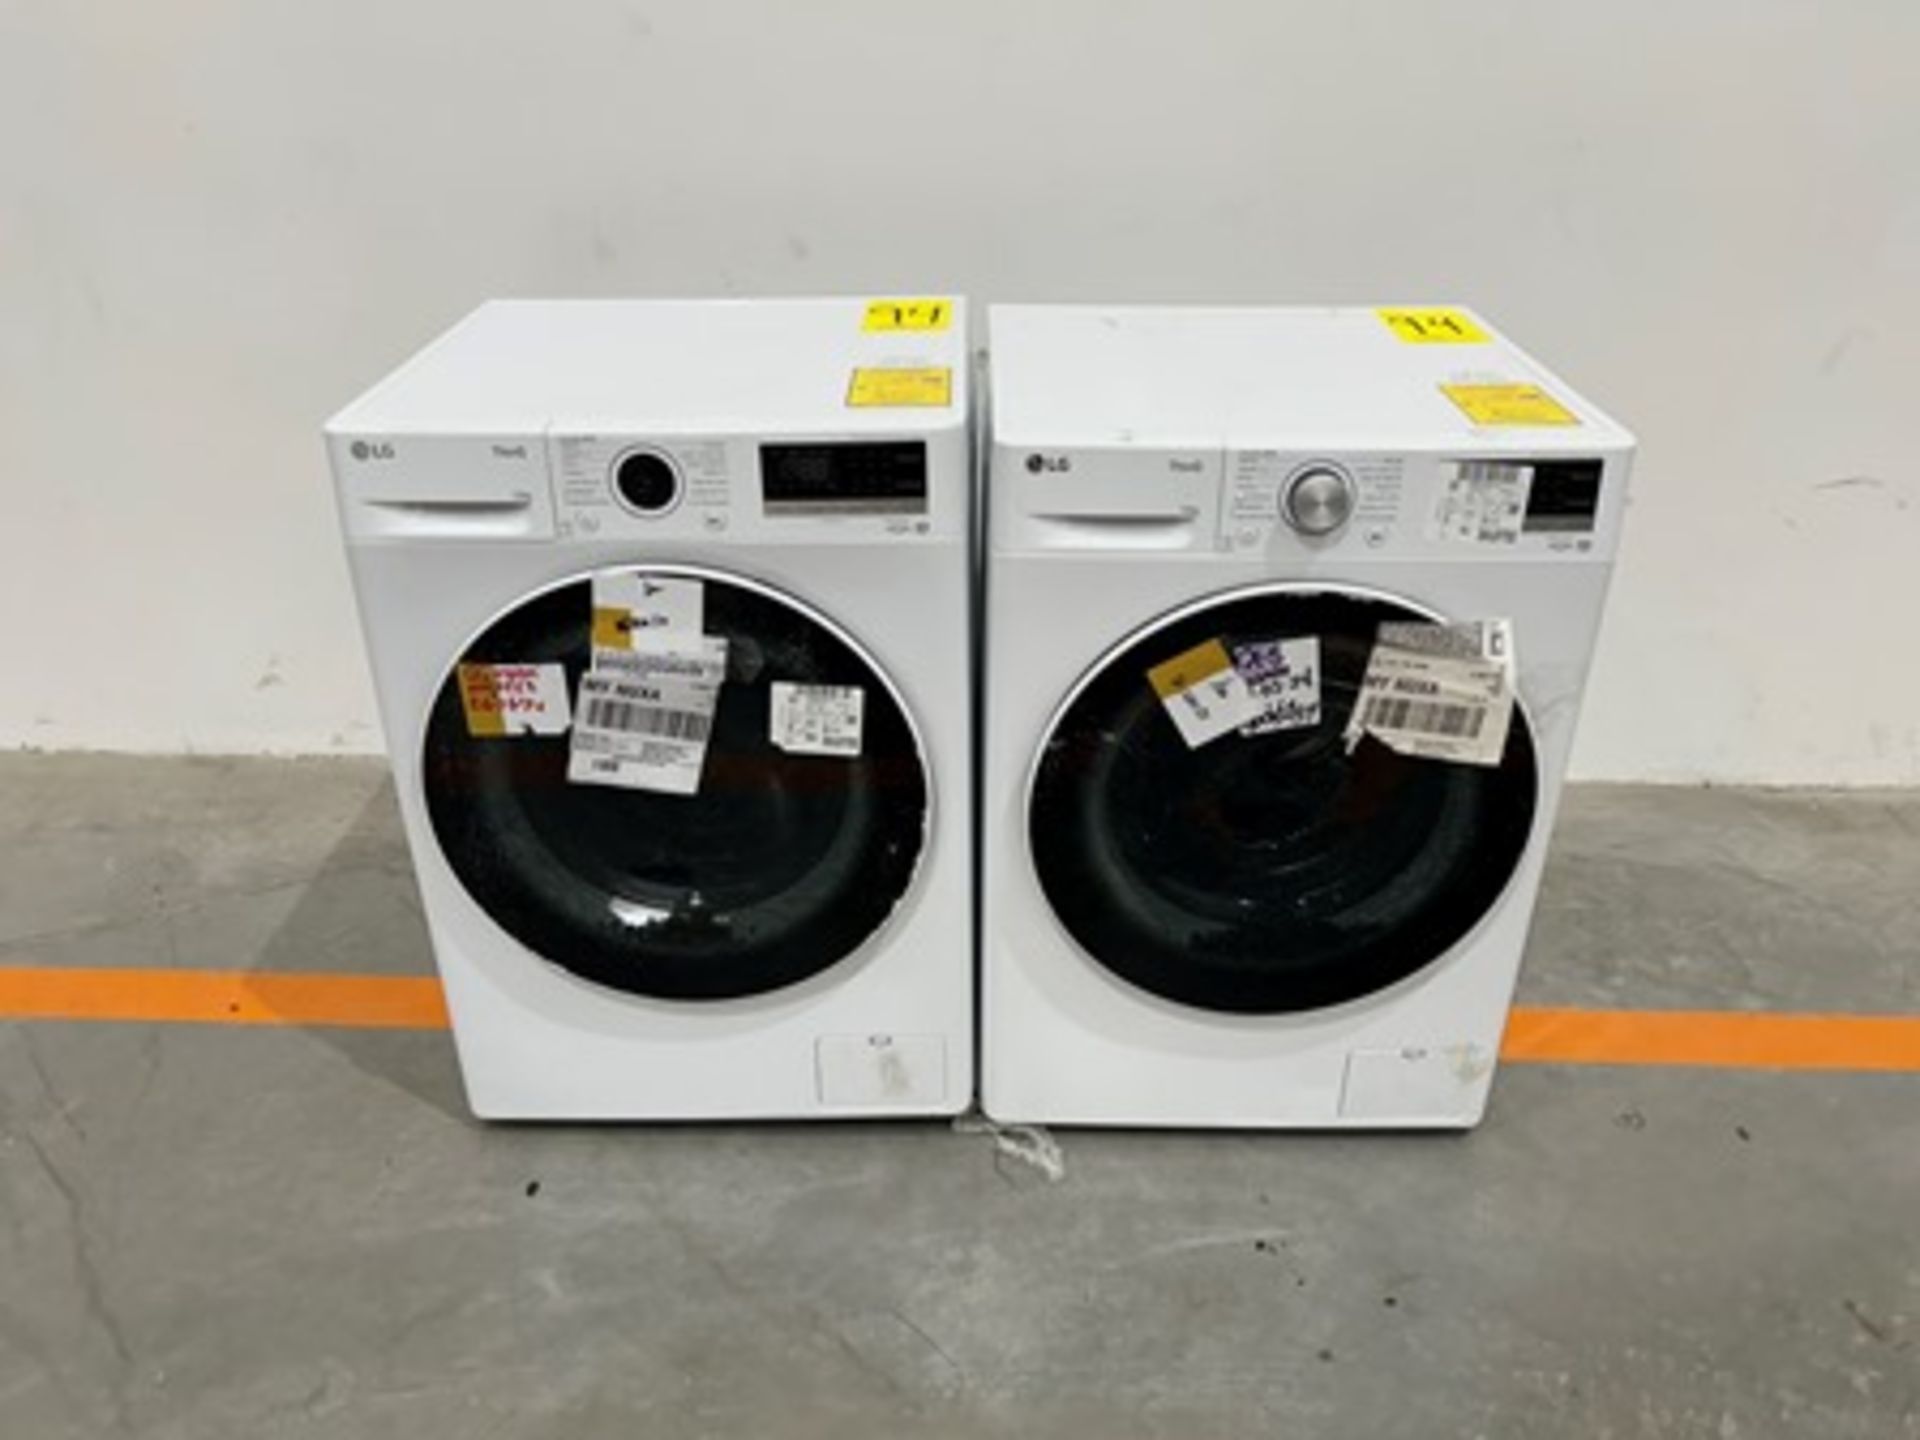 Lote de 2 lavadoras contiene: 1 Lavadora de 12 KG Marca LG, Modelo WM12WVC4S6, Serie 53846, Color B